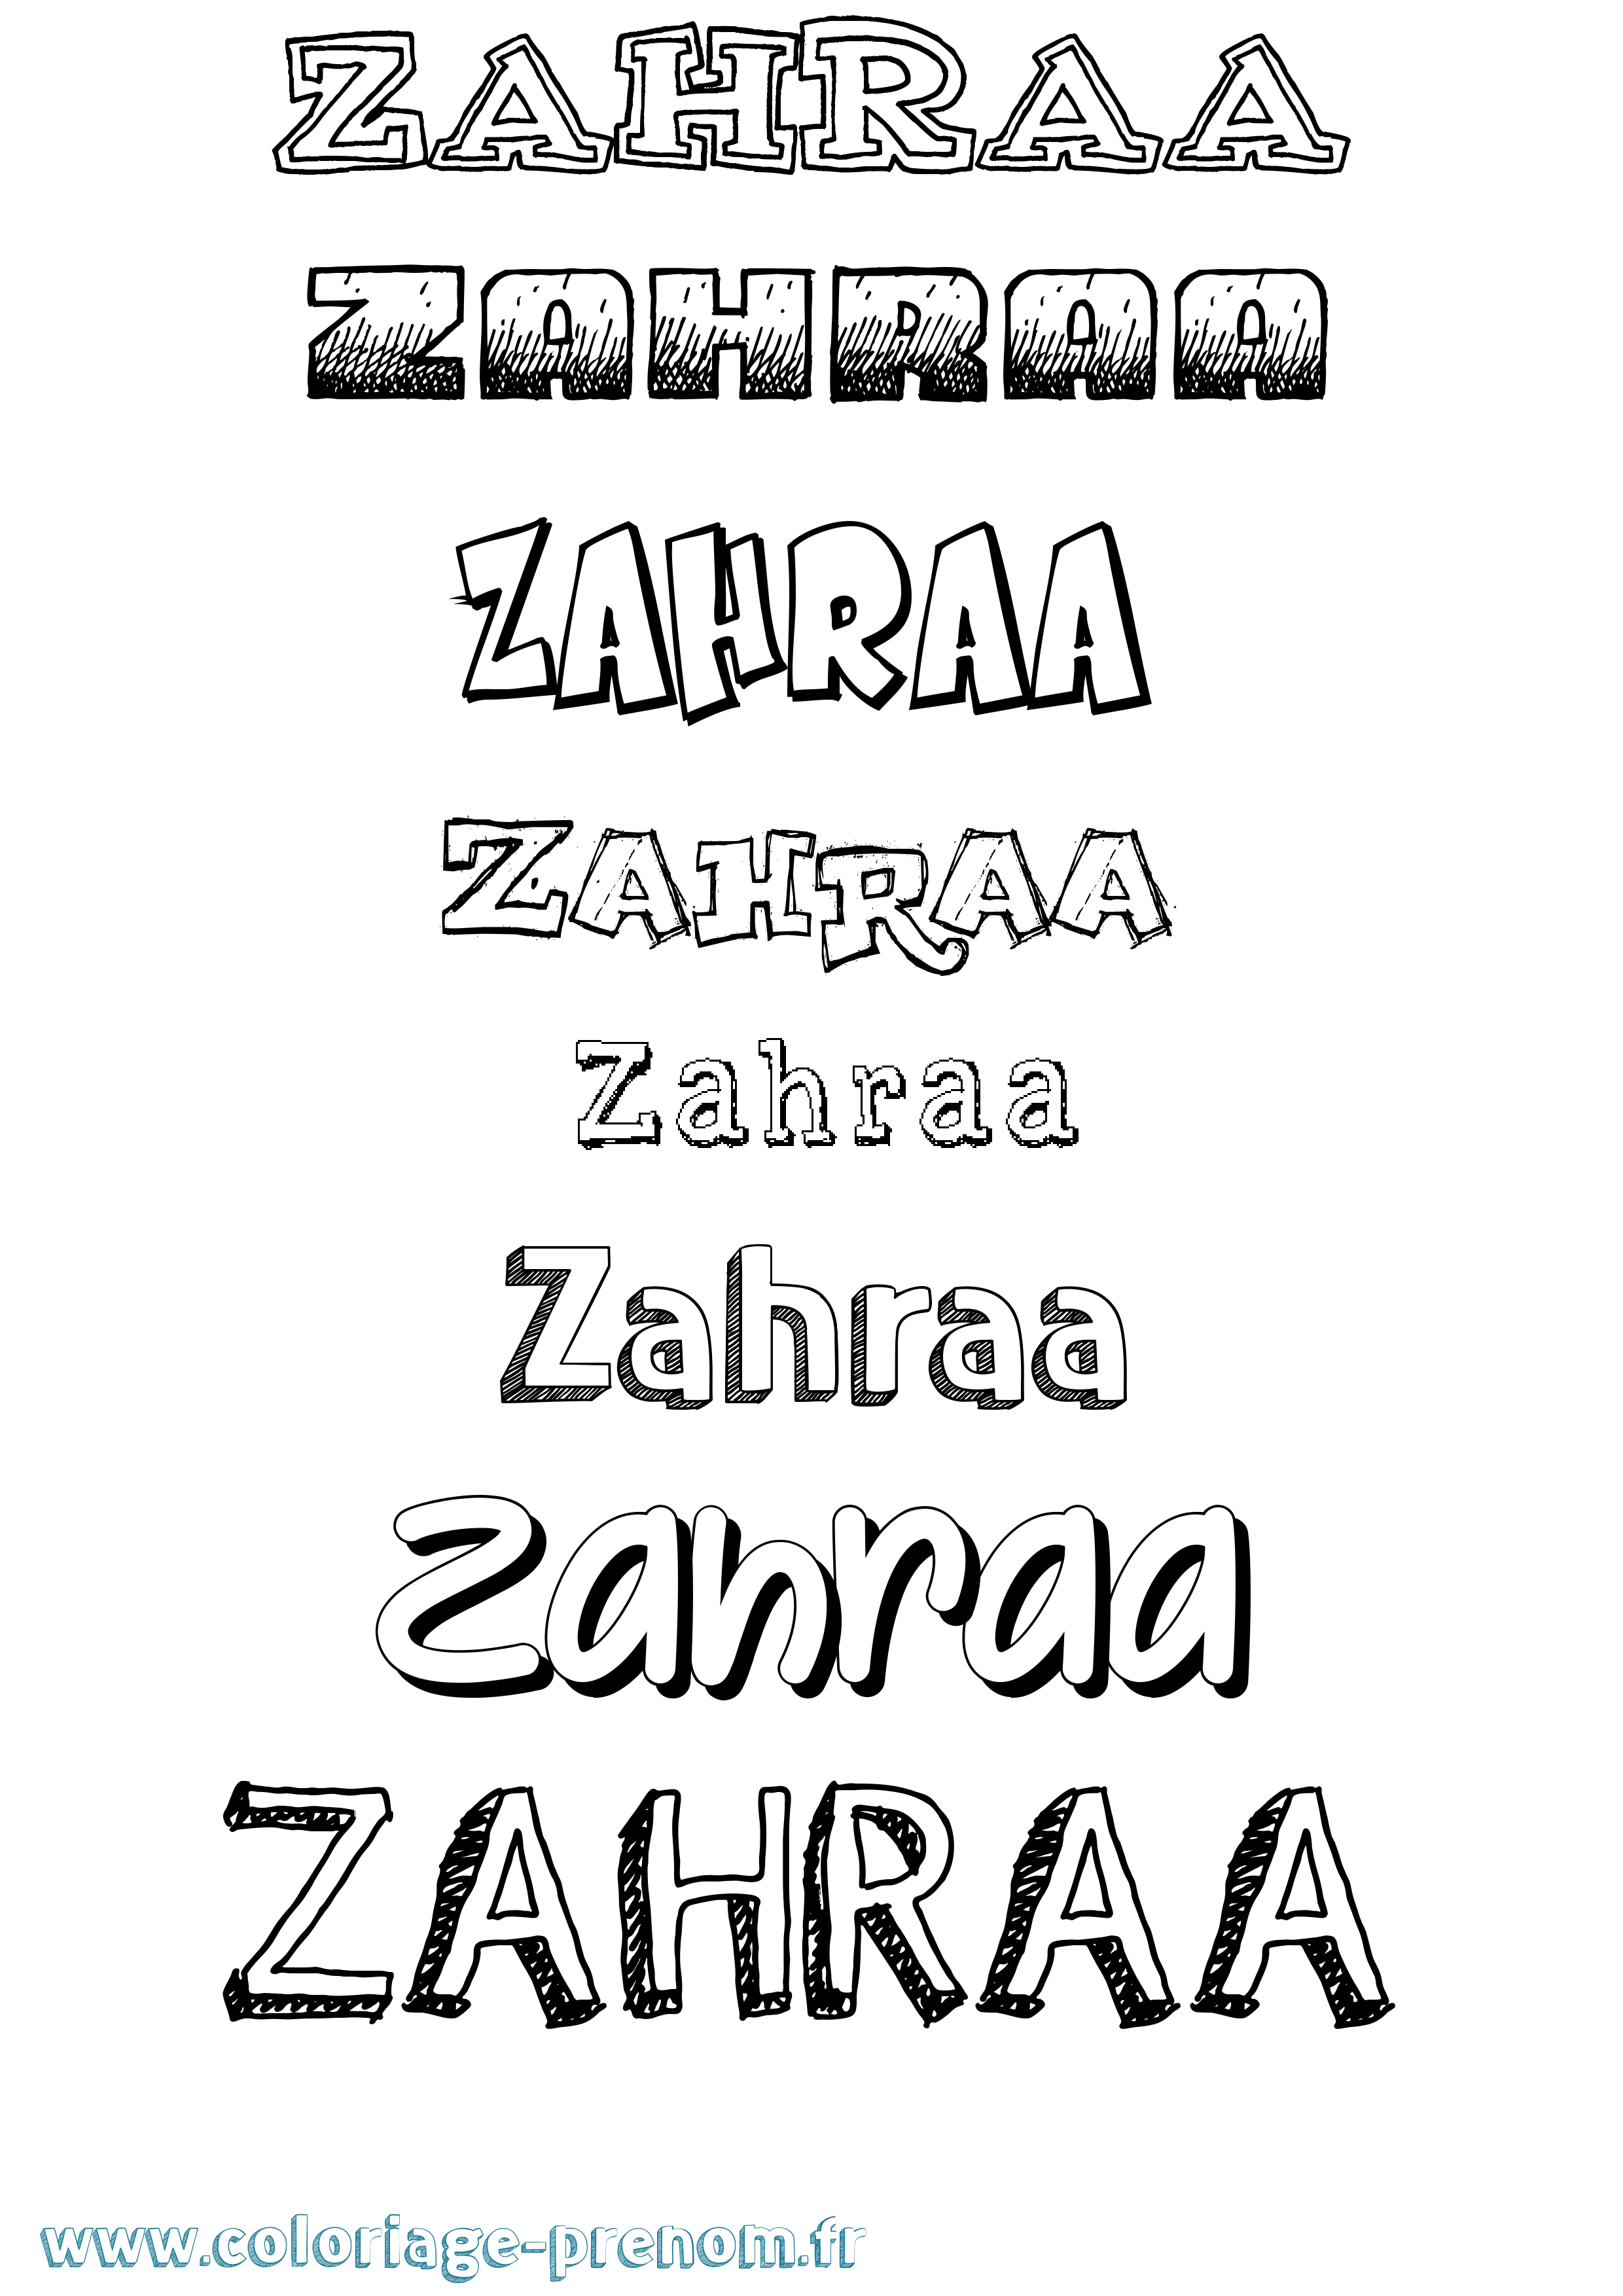 Coloriage prénom Zahraa Dessiné